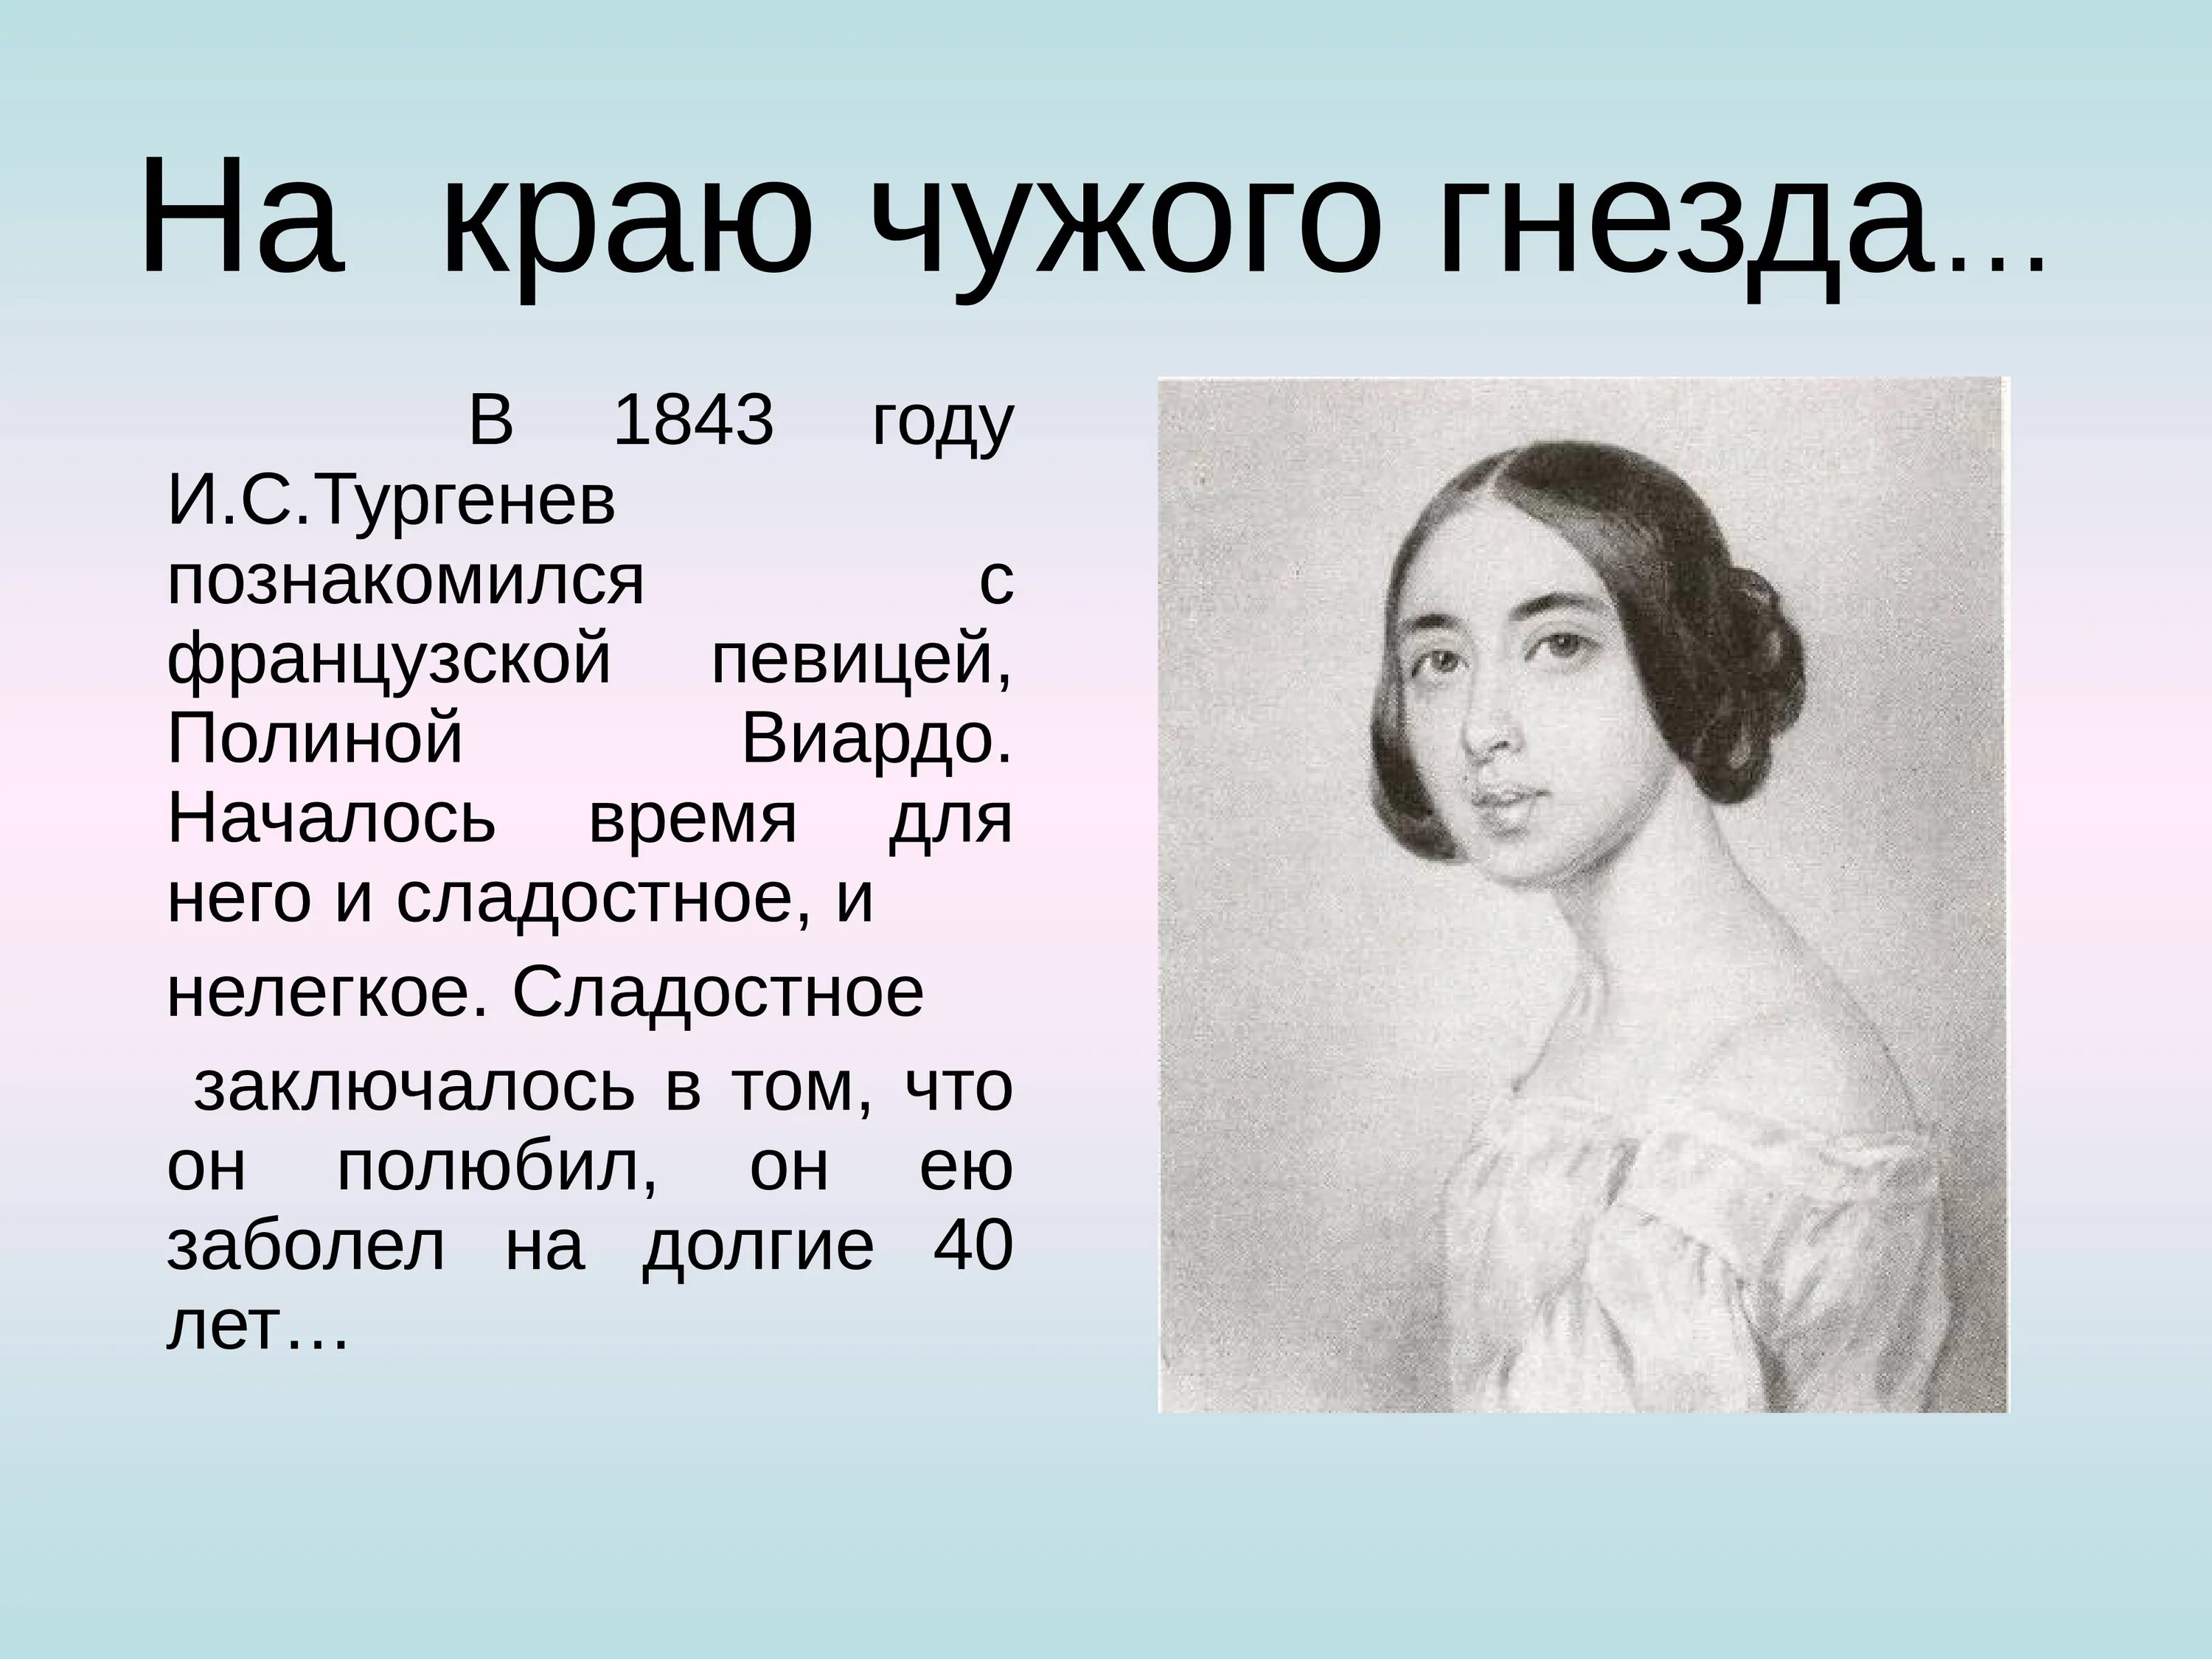 Тургенева познакомился с Полиной Виардо. Тургенев 1818. Портрет Полины Виардо. Тургенев презентация.